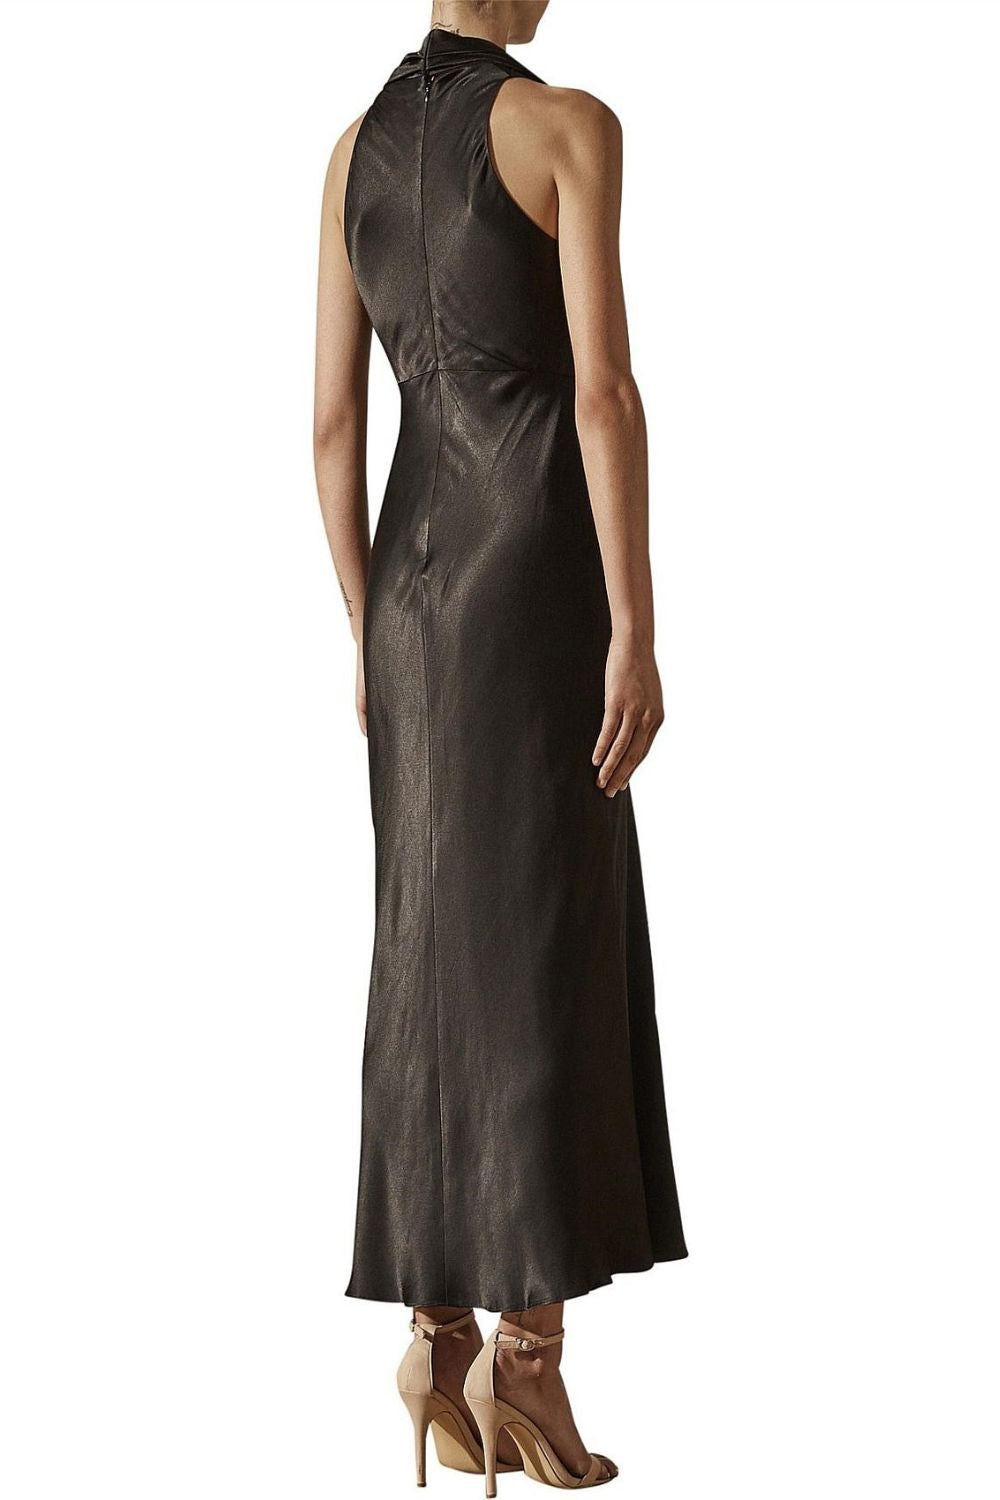 Shona Joy | Wright Scarf Neck Midi Dress | Black